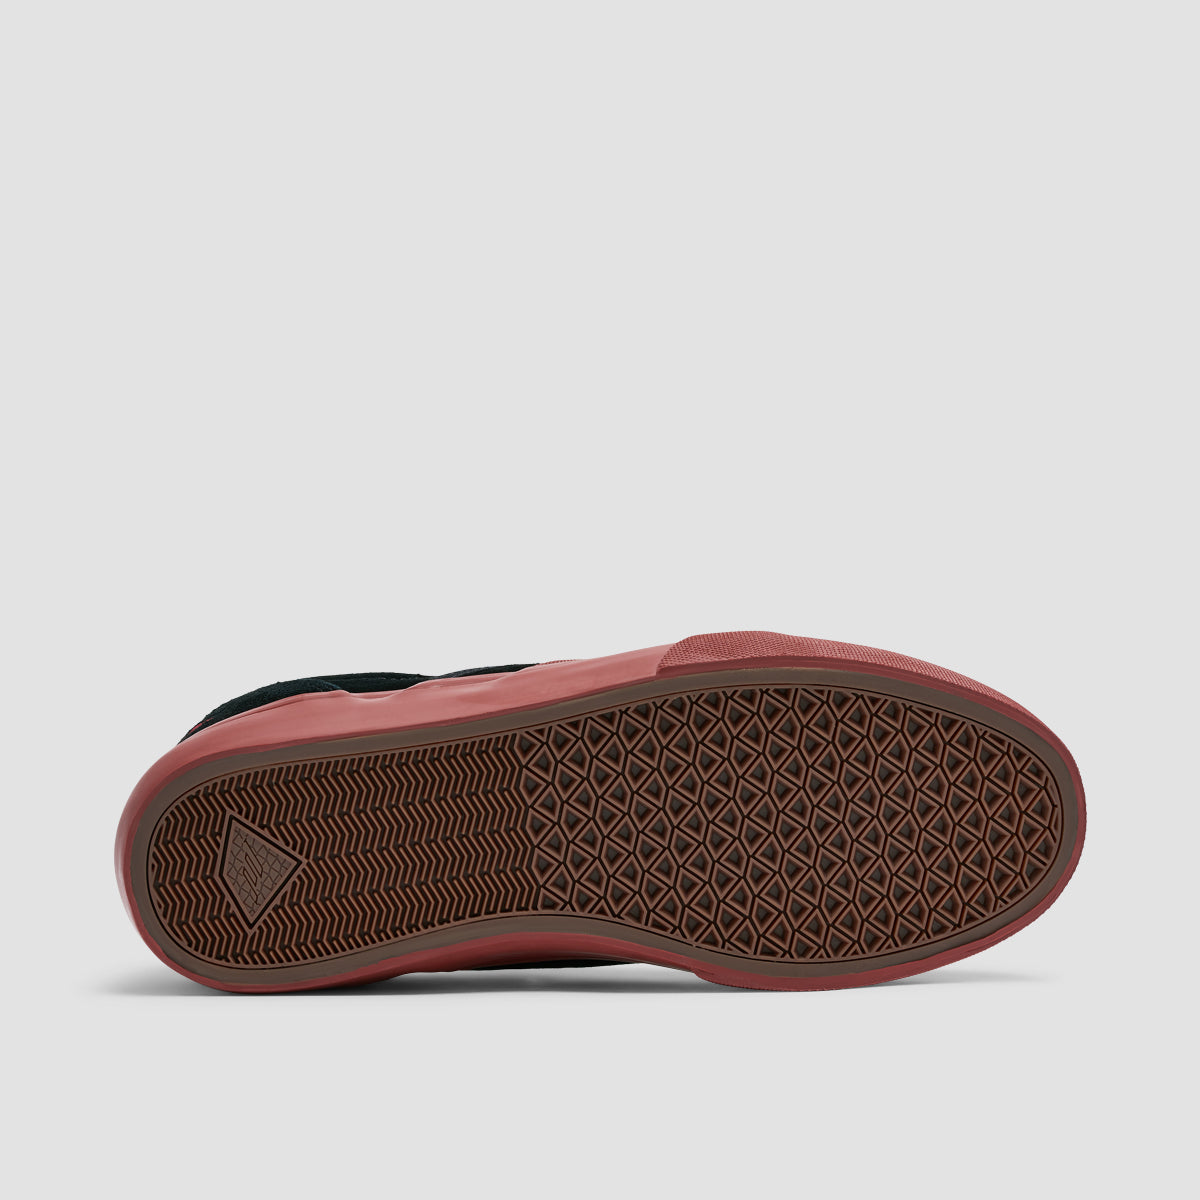 Emerica Wino G6 Slip On Shoes Black/Red/Gum